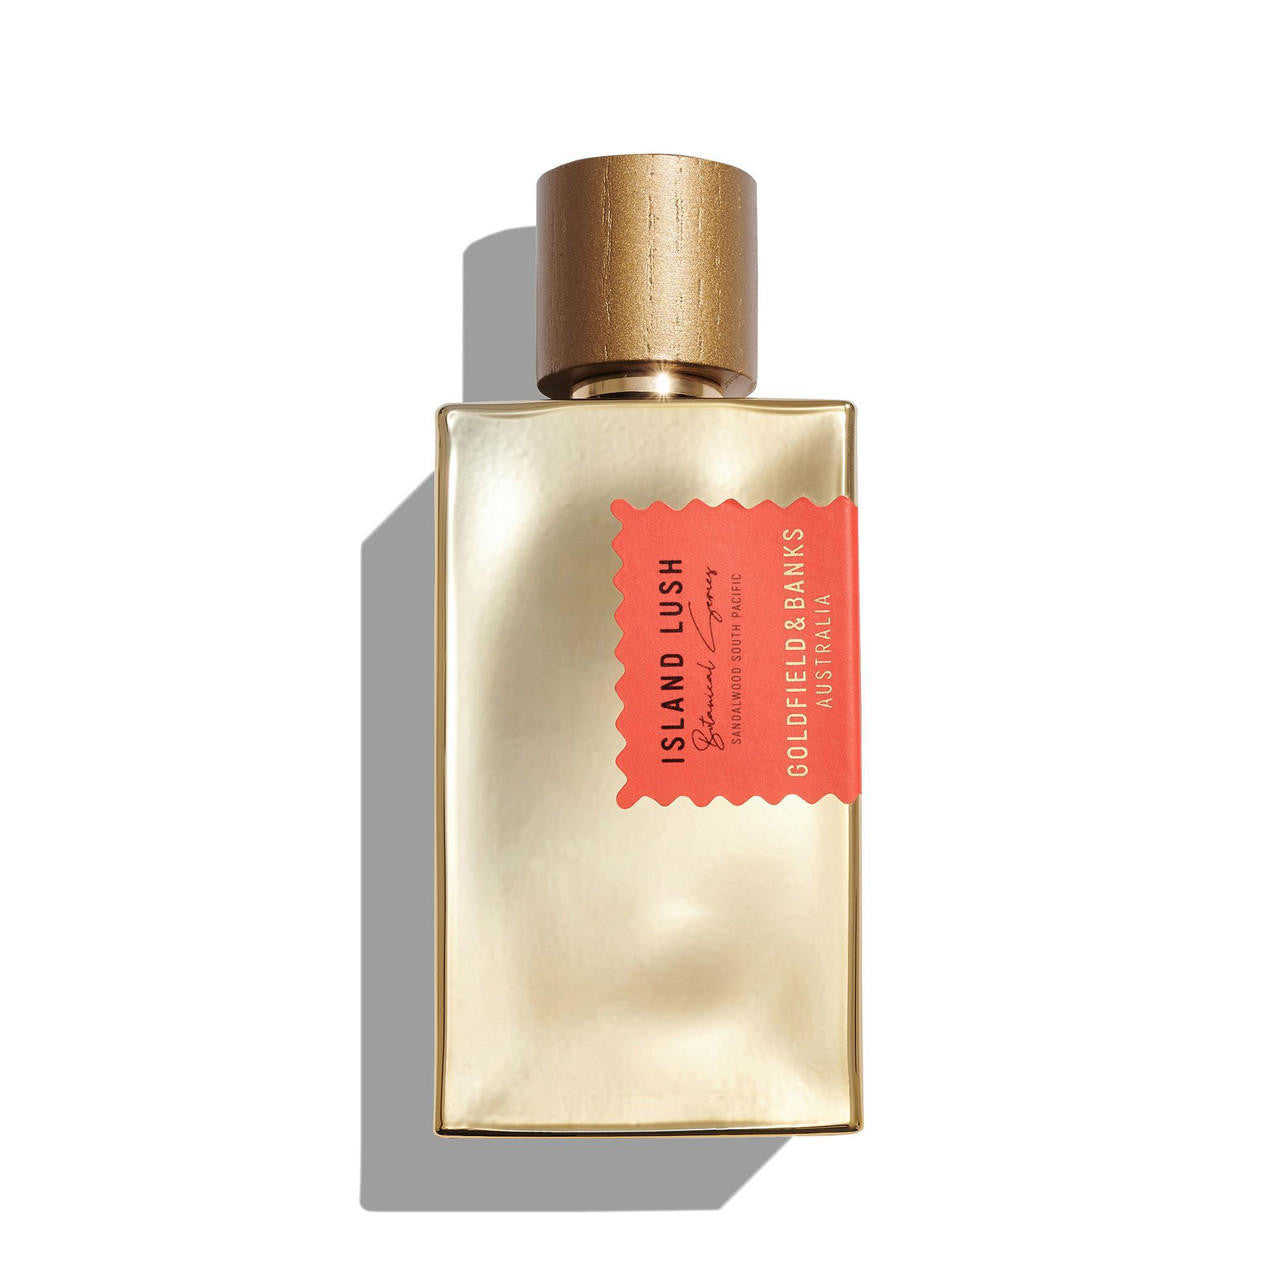  Goldfield & Banks Australia ISLAND LUSH Perfume Concentrate 